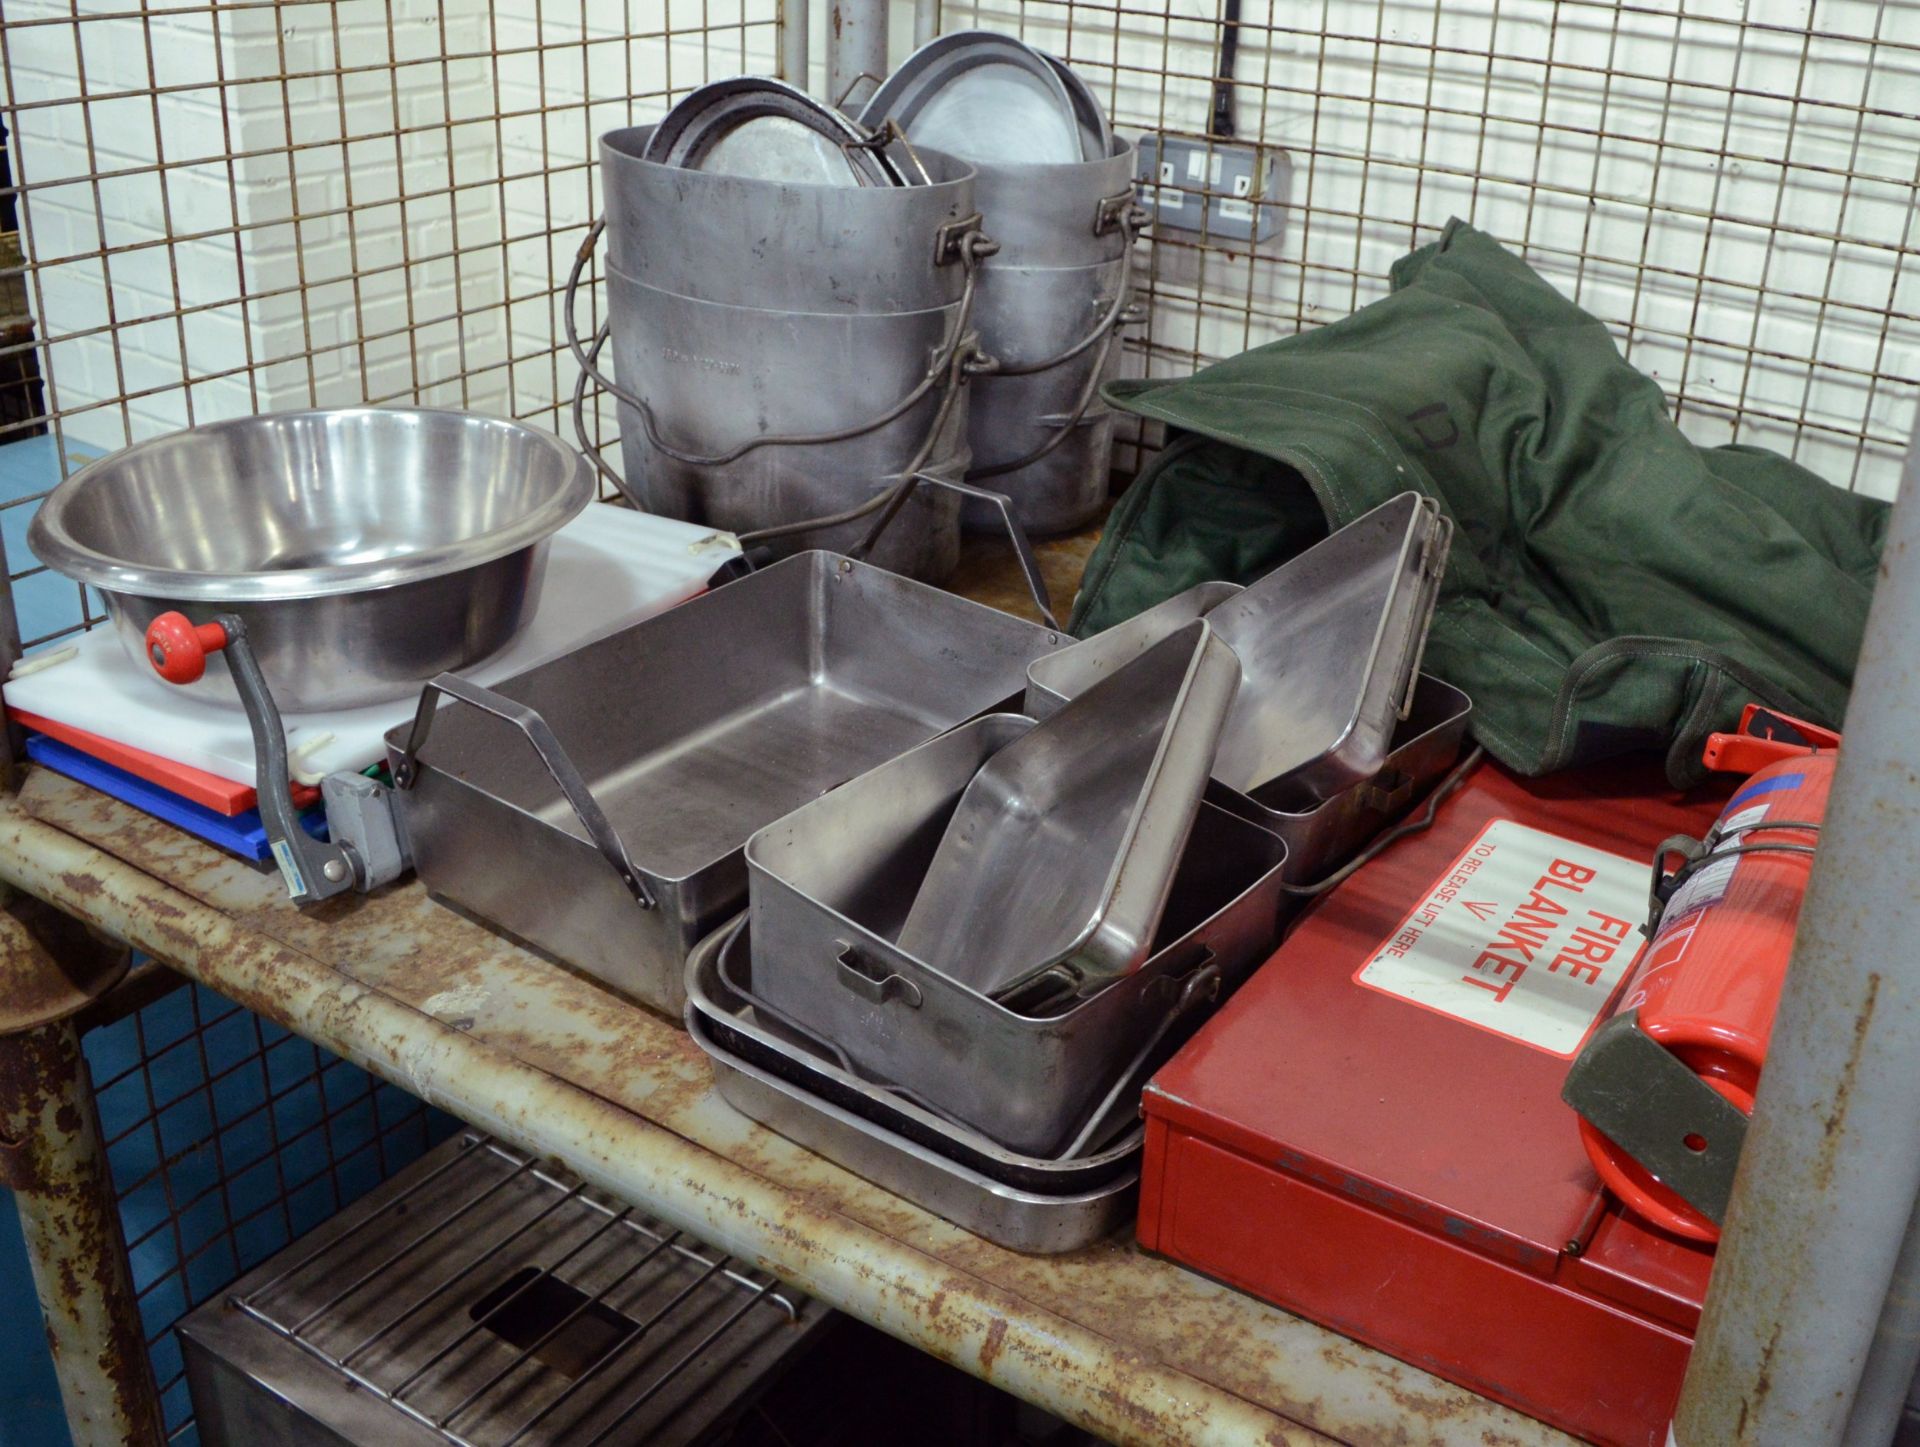 Field Kitchen set - cooker, oven, utensil set in carry box, norweigen food boxes, accessor - Bild 2 aus 4